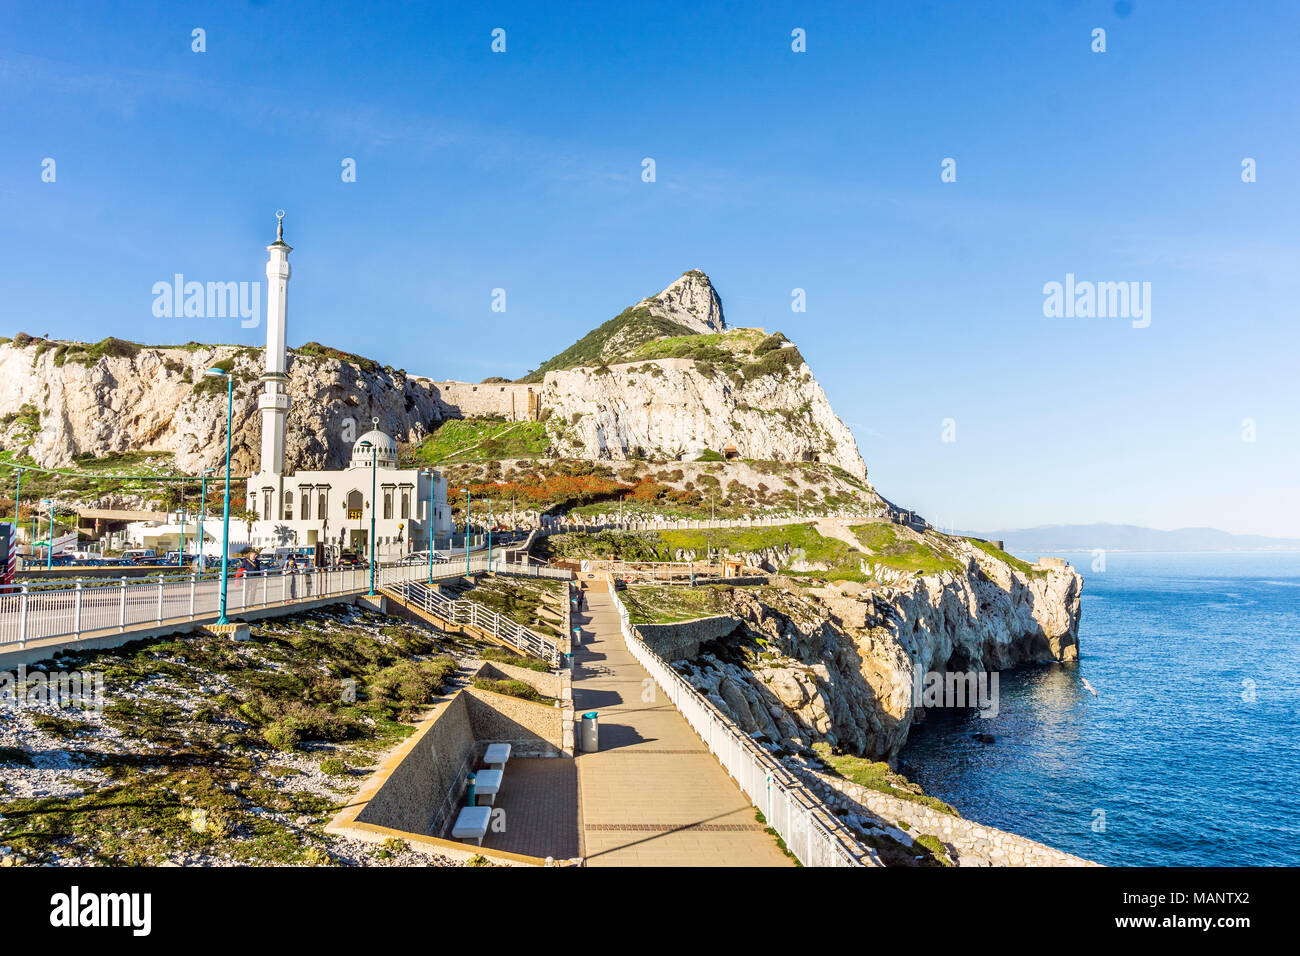 Ibrahim-al-Ibrahim Mosque by the sea in Gibraltar, British overseas territory Stock Photo